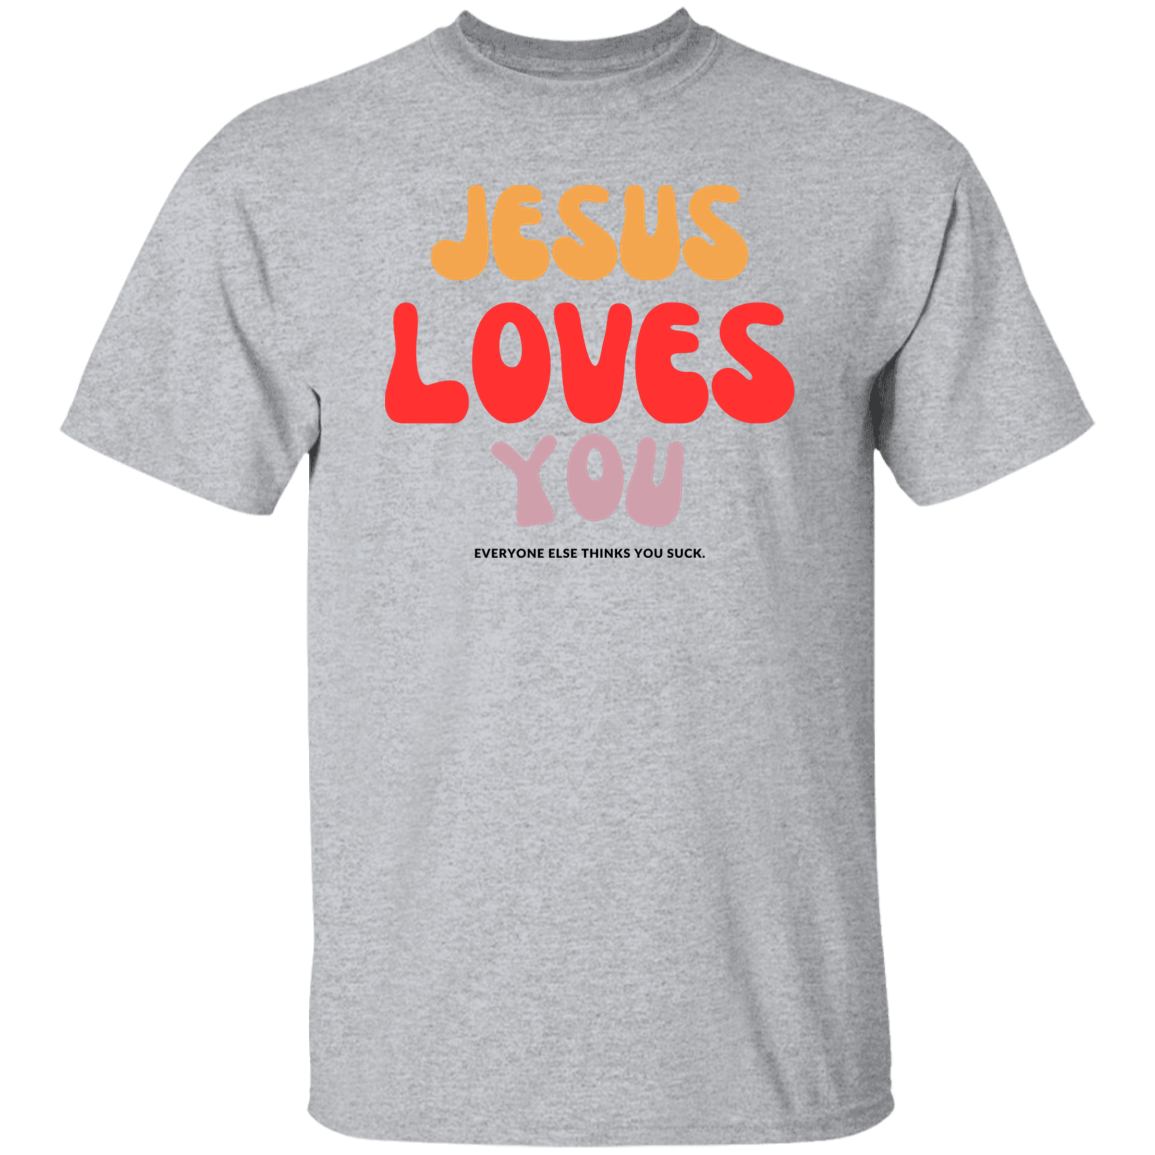 Jesus Loves You, Funny T-Shirt